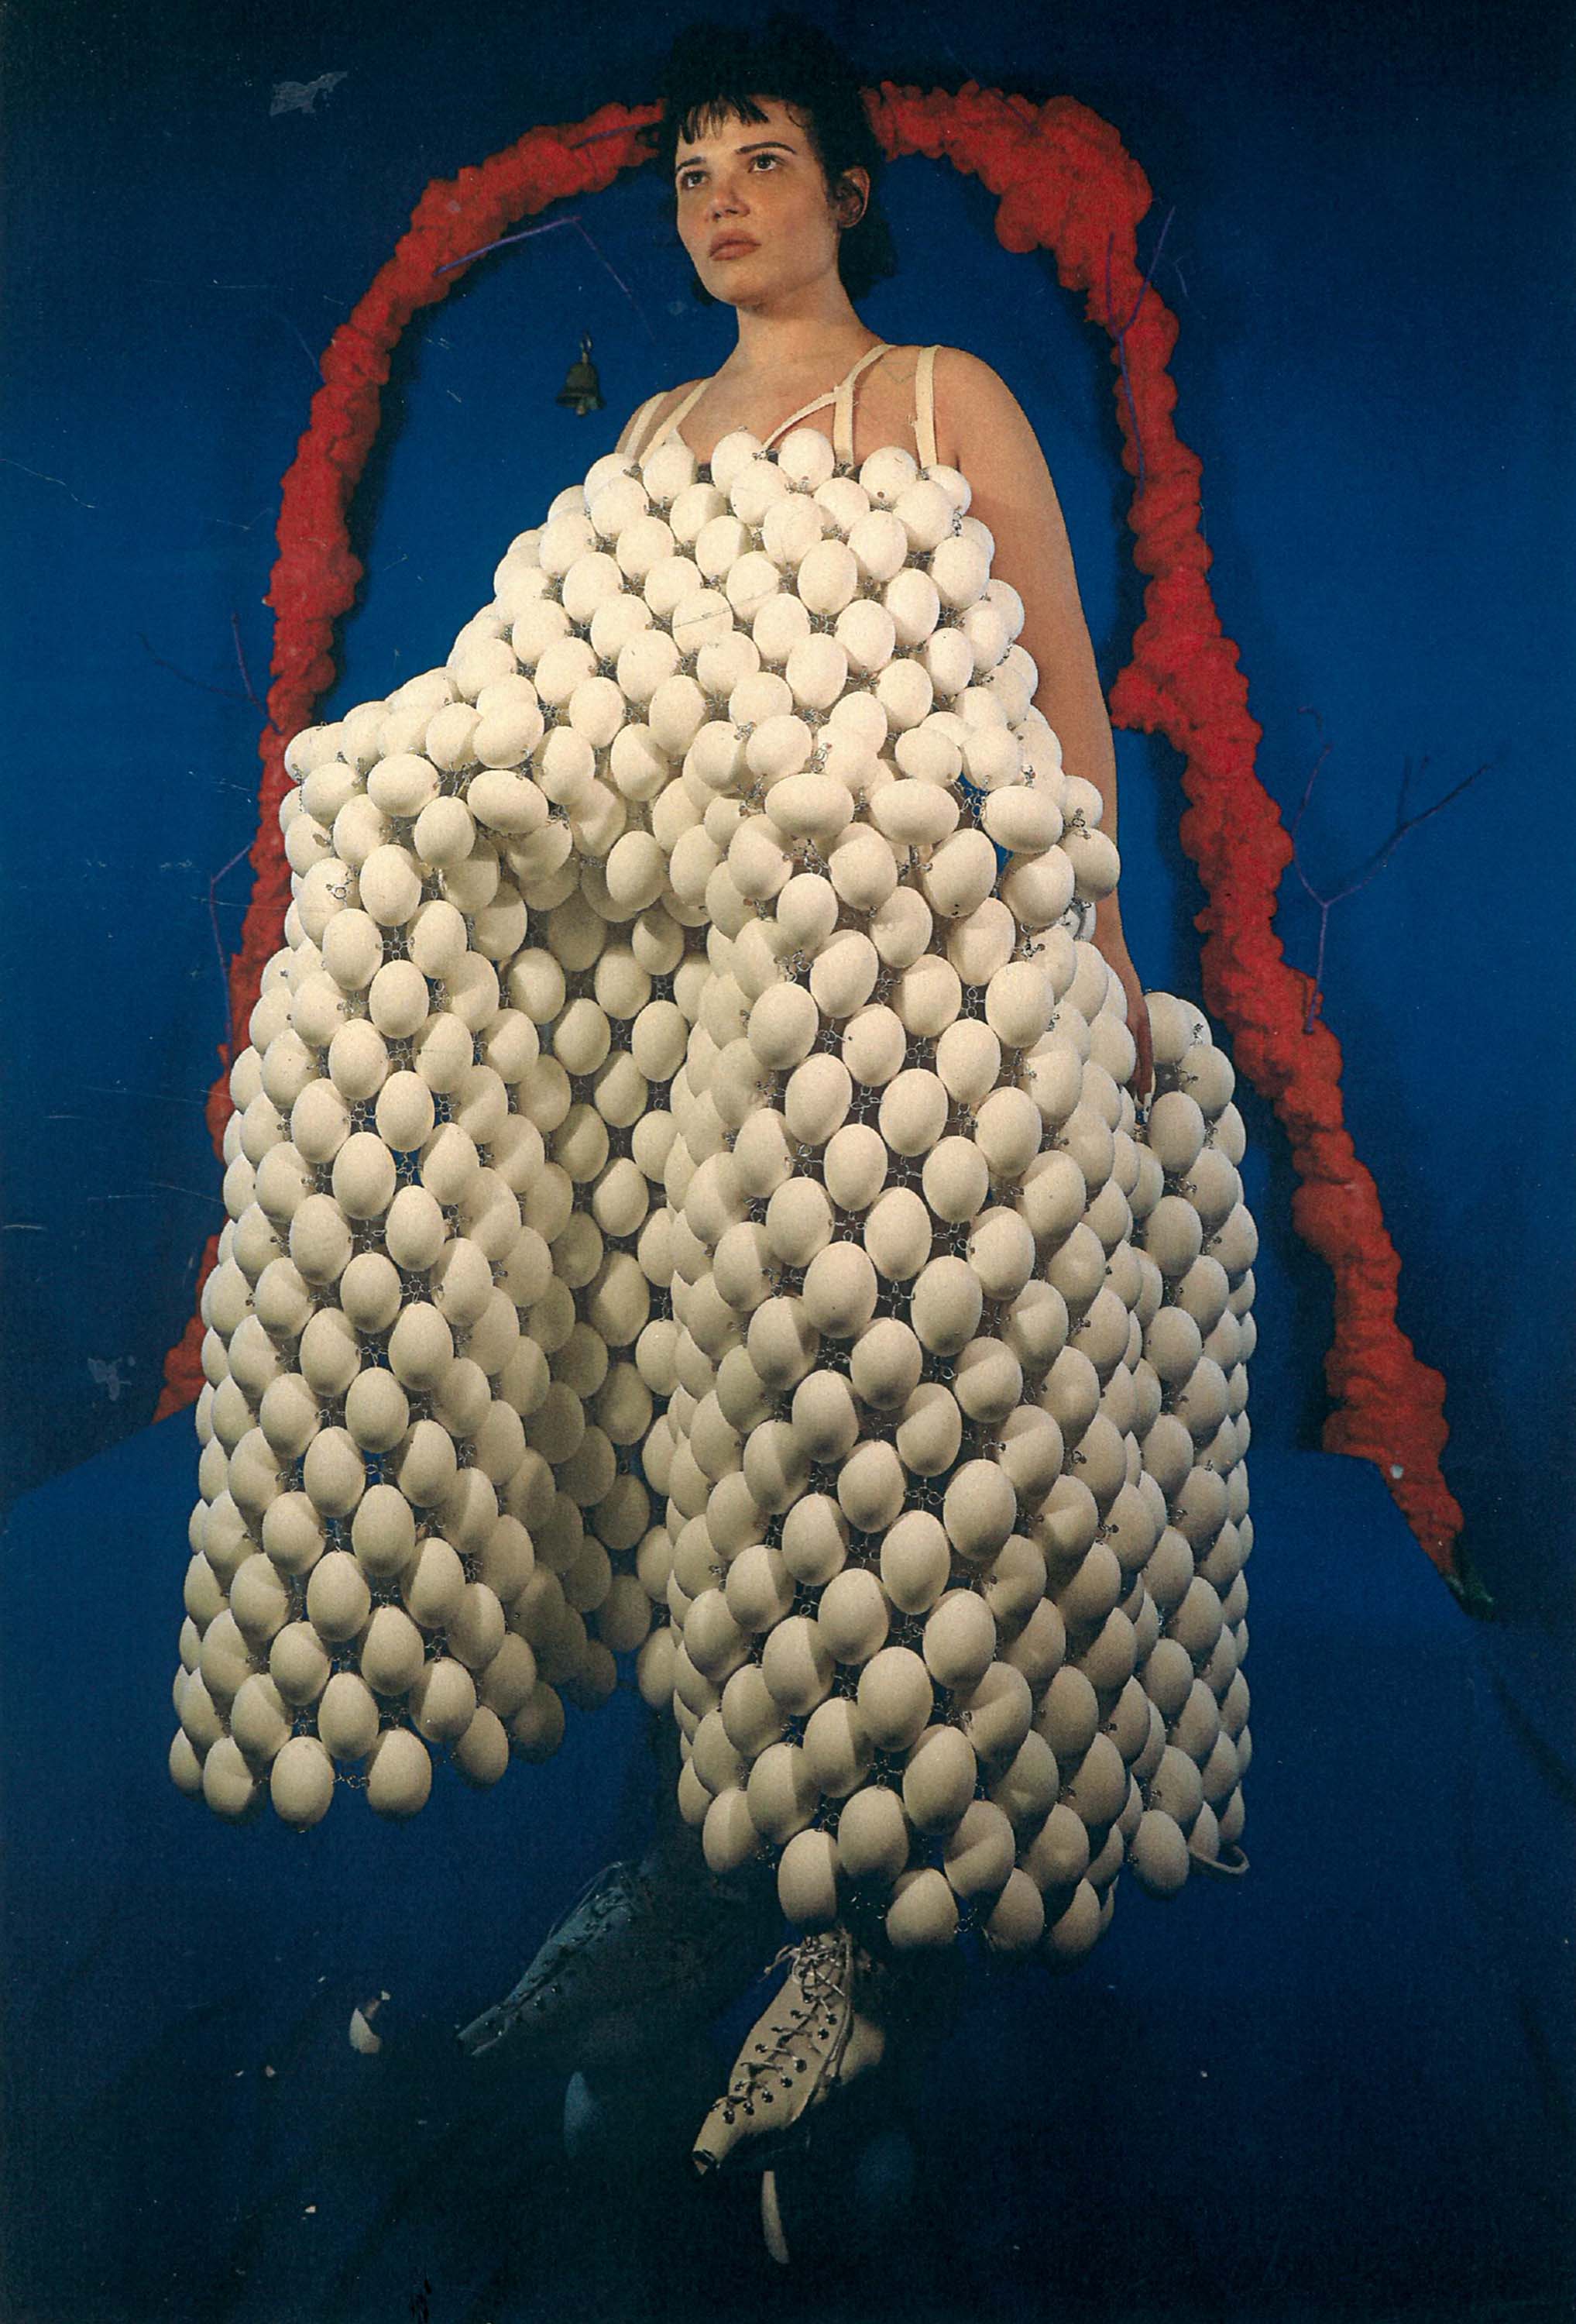 Figure wearing dress made of duck eggs